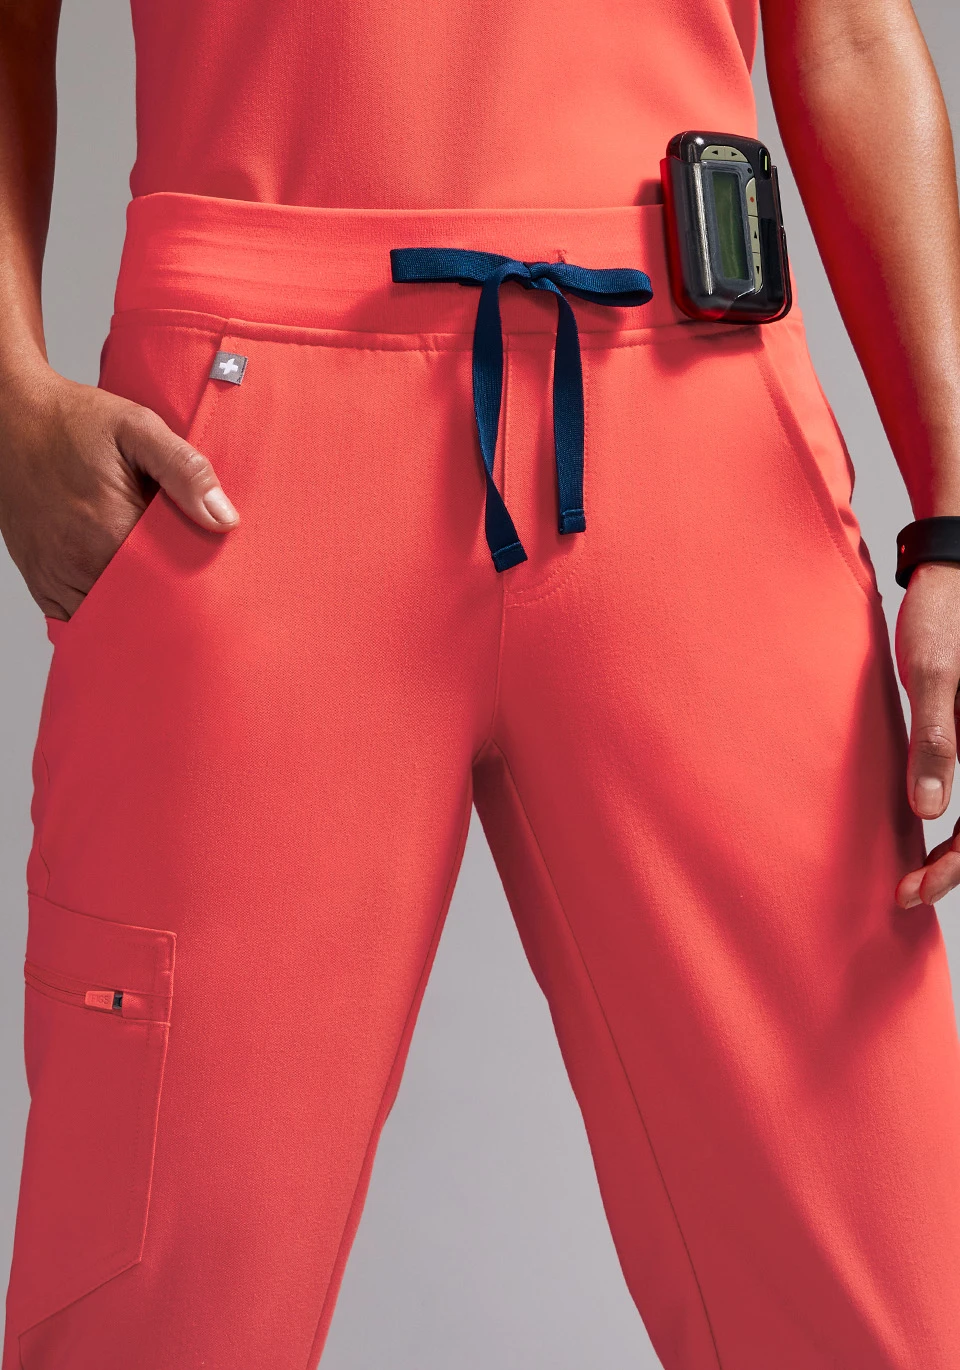 FIGS Zamora Jogger Style Scrub Pants for Women - Burgundy, Small Petite in  Dubai - UAE